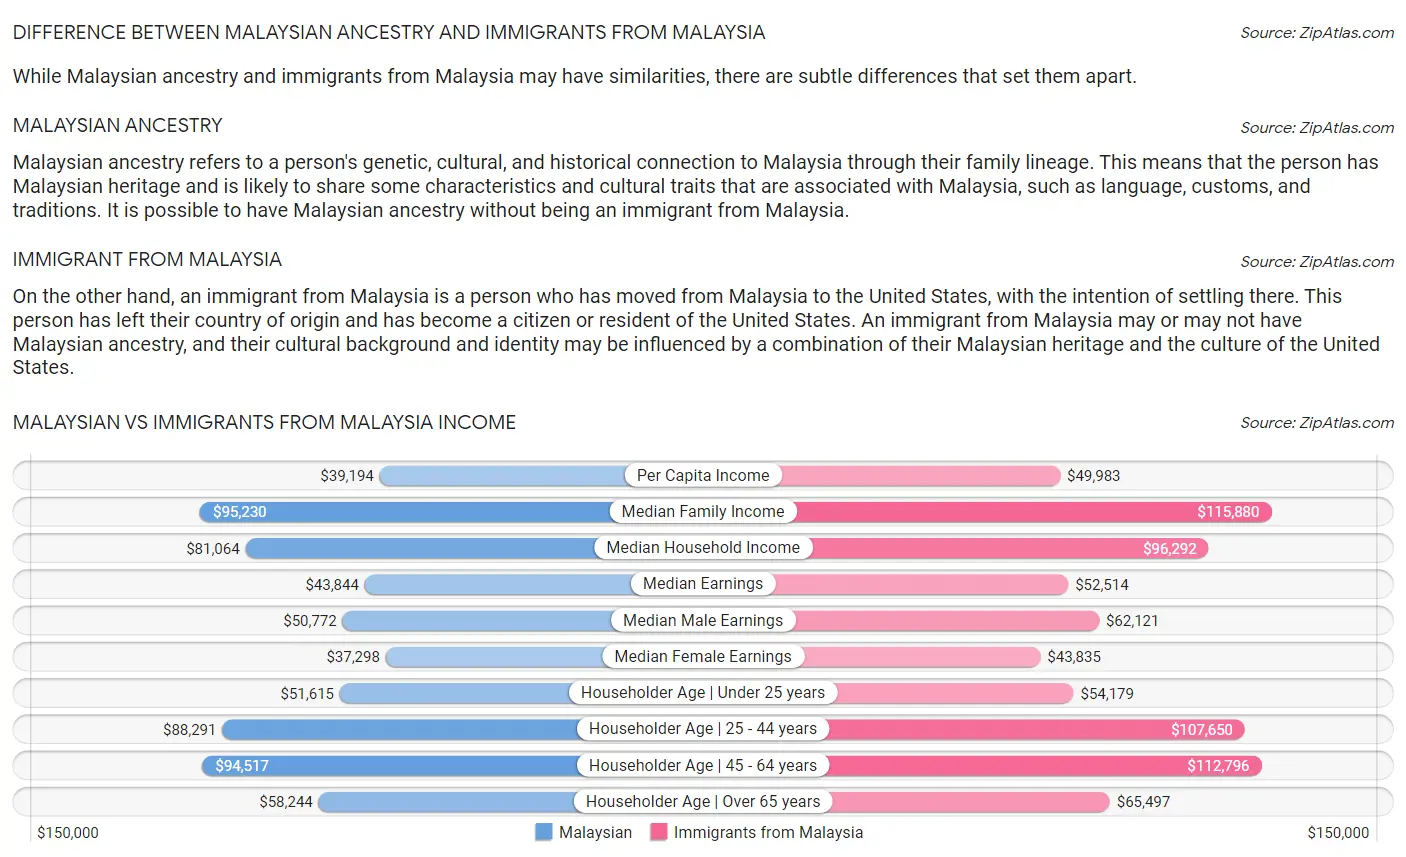 Malaysian vs Immigrants from Malaysia Income